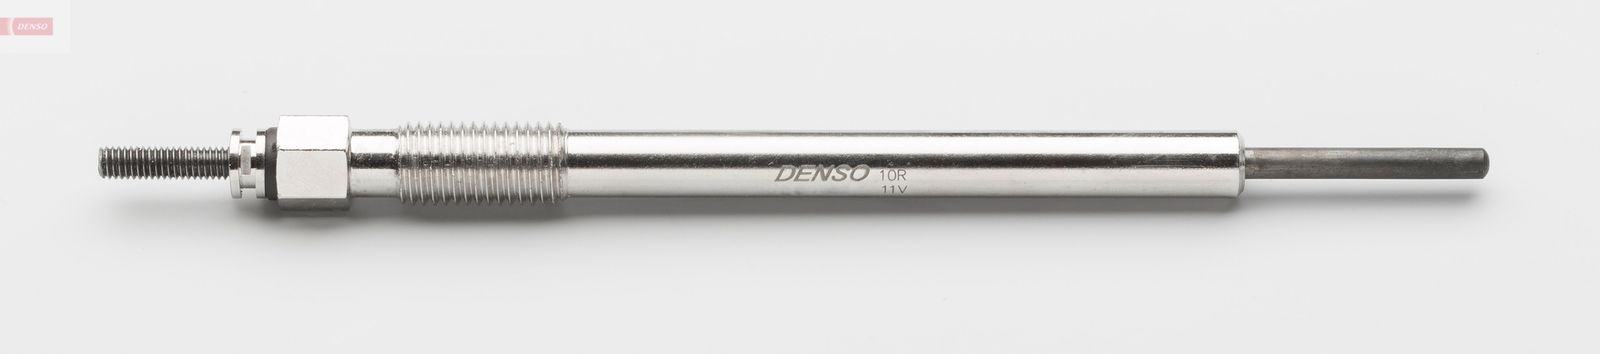 żeraviaca sviečka DENSO DG-600